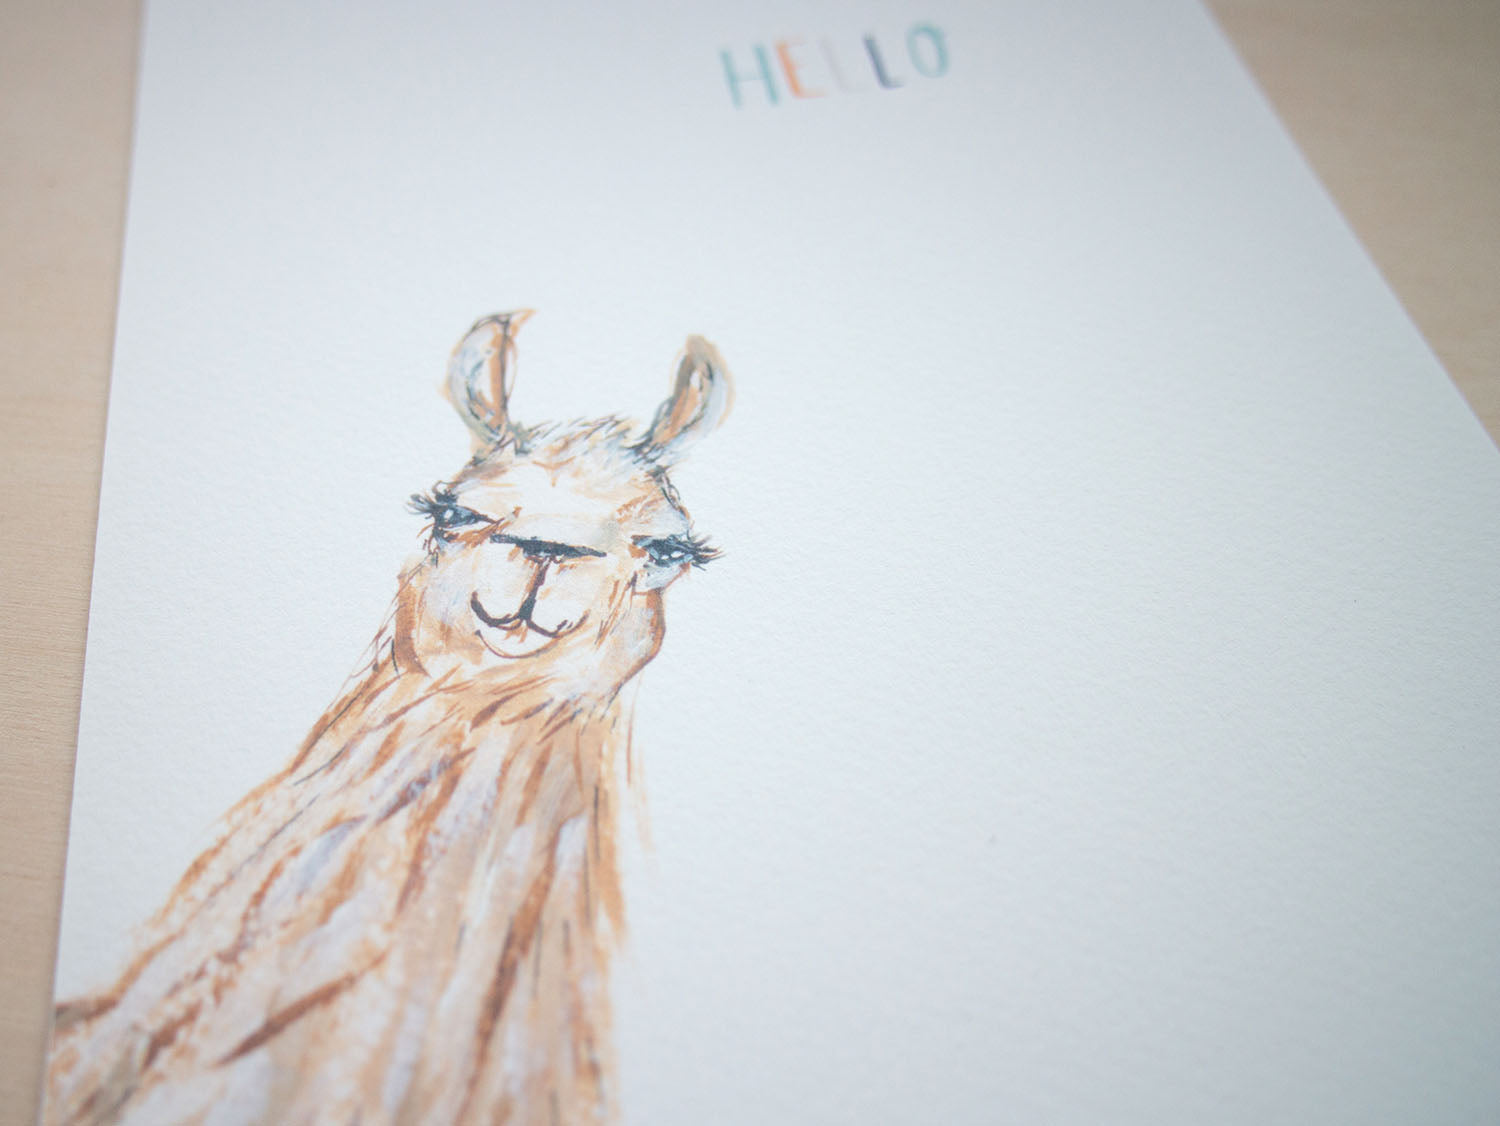 A5 Hello Llama Art Print